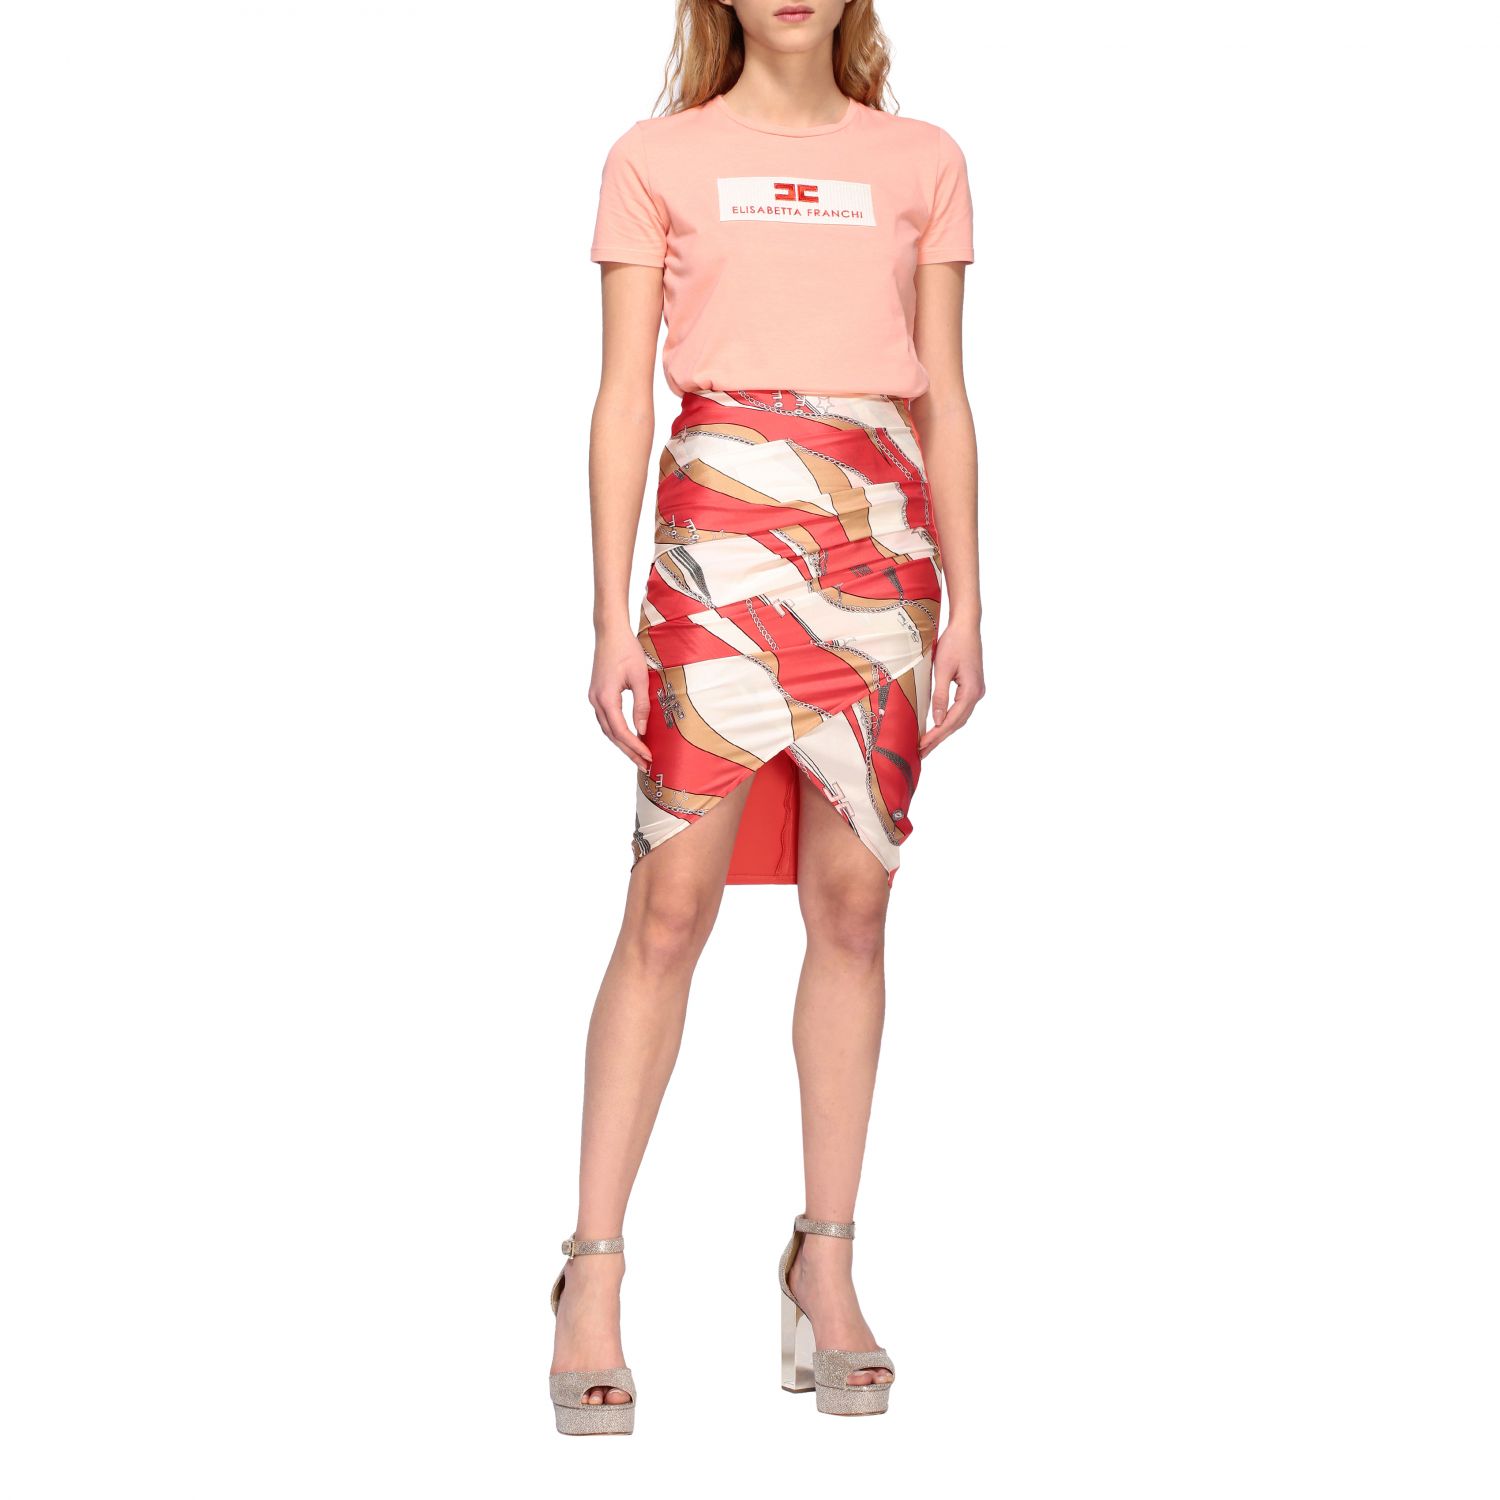 Elisabetta Franchi pencil skirt with chain print